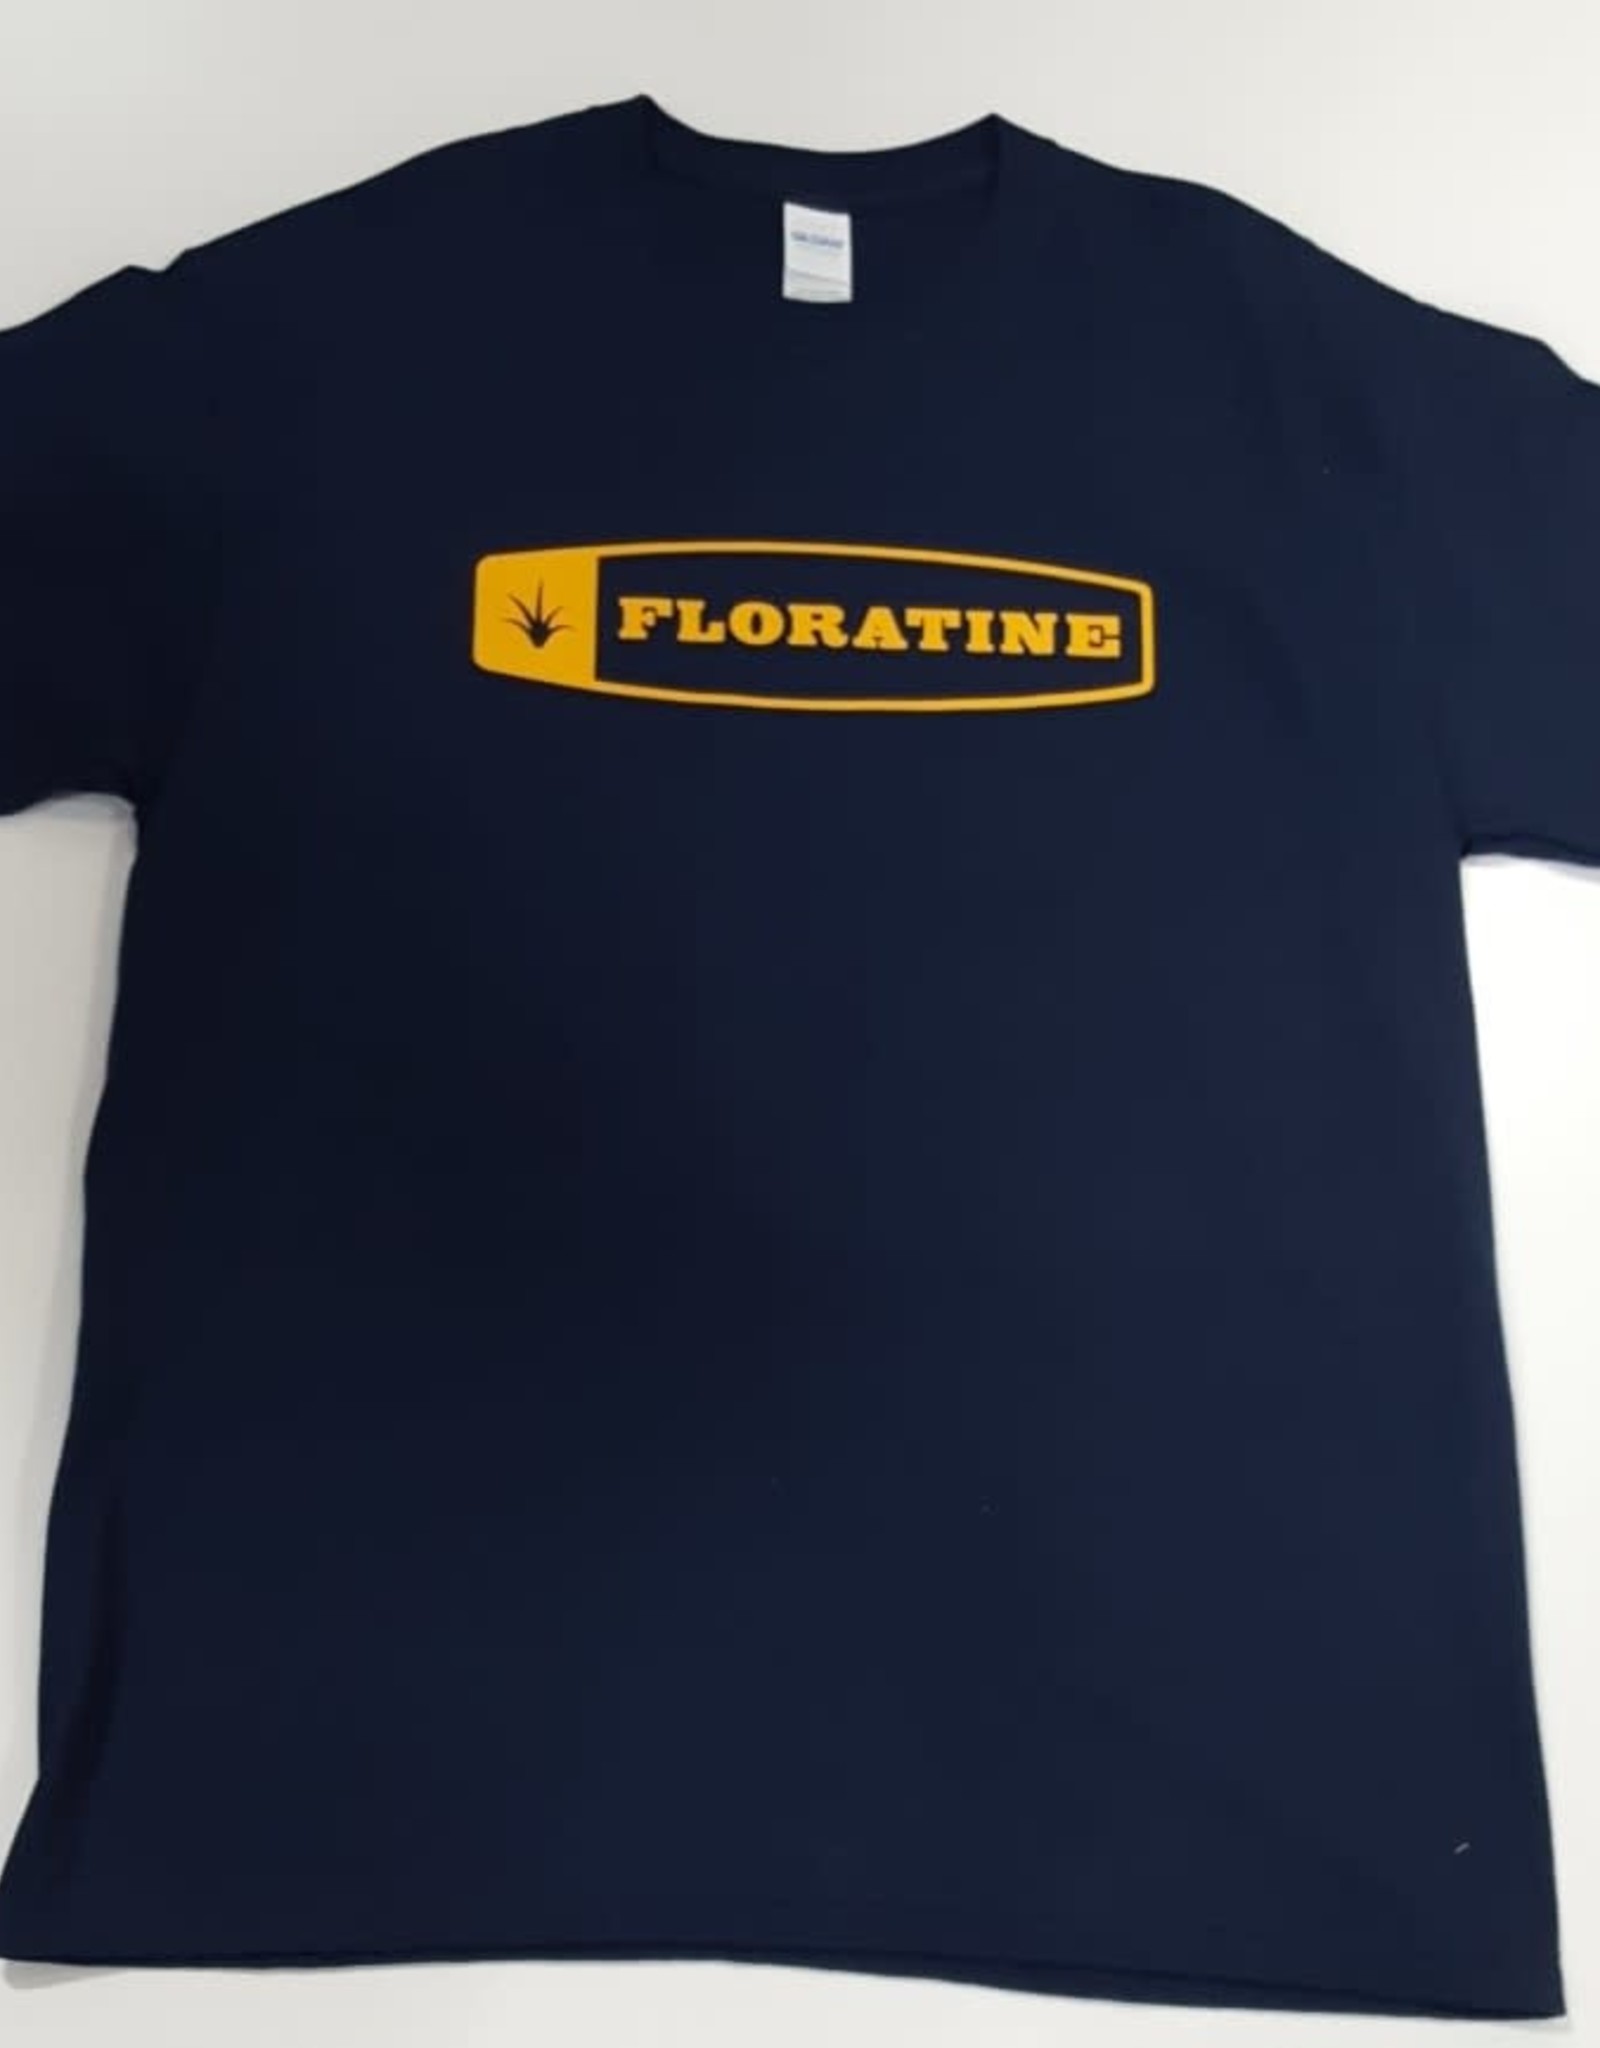 Gildan Floratine  S/S Tee with Logo